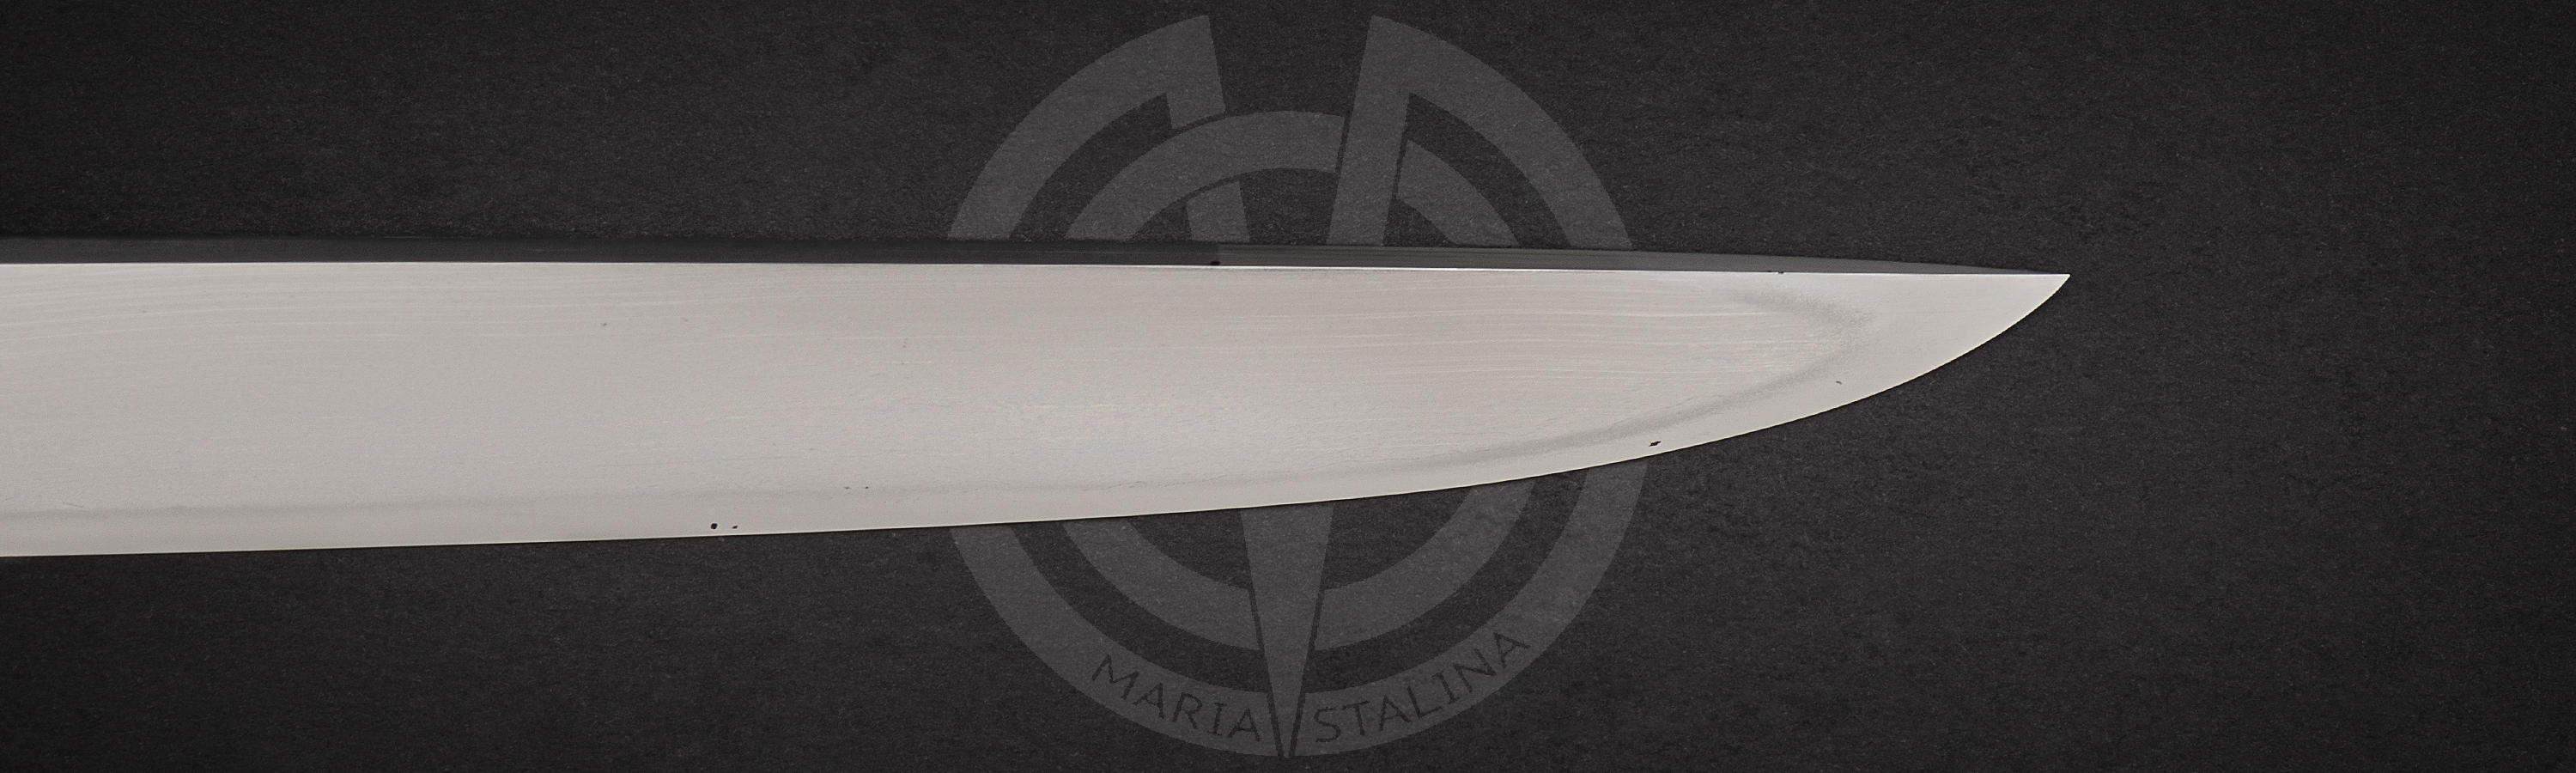 Slight reverse bend of the blade